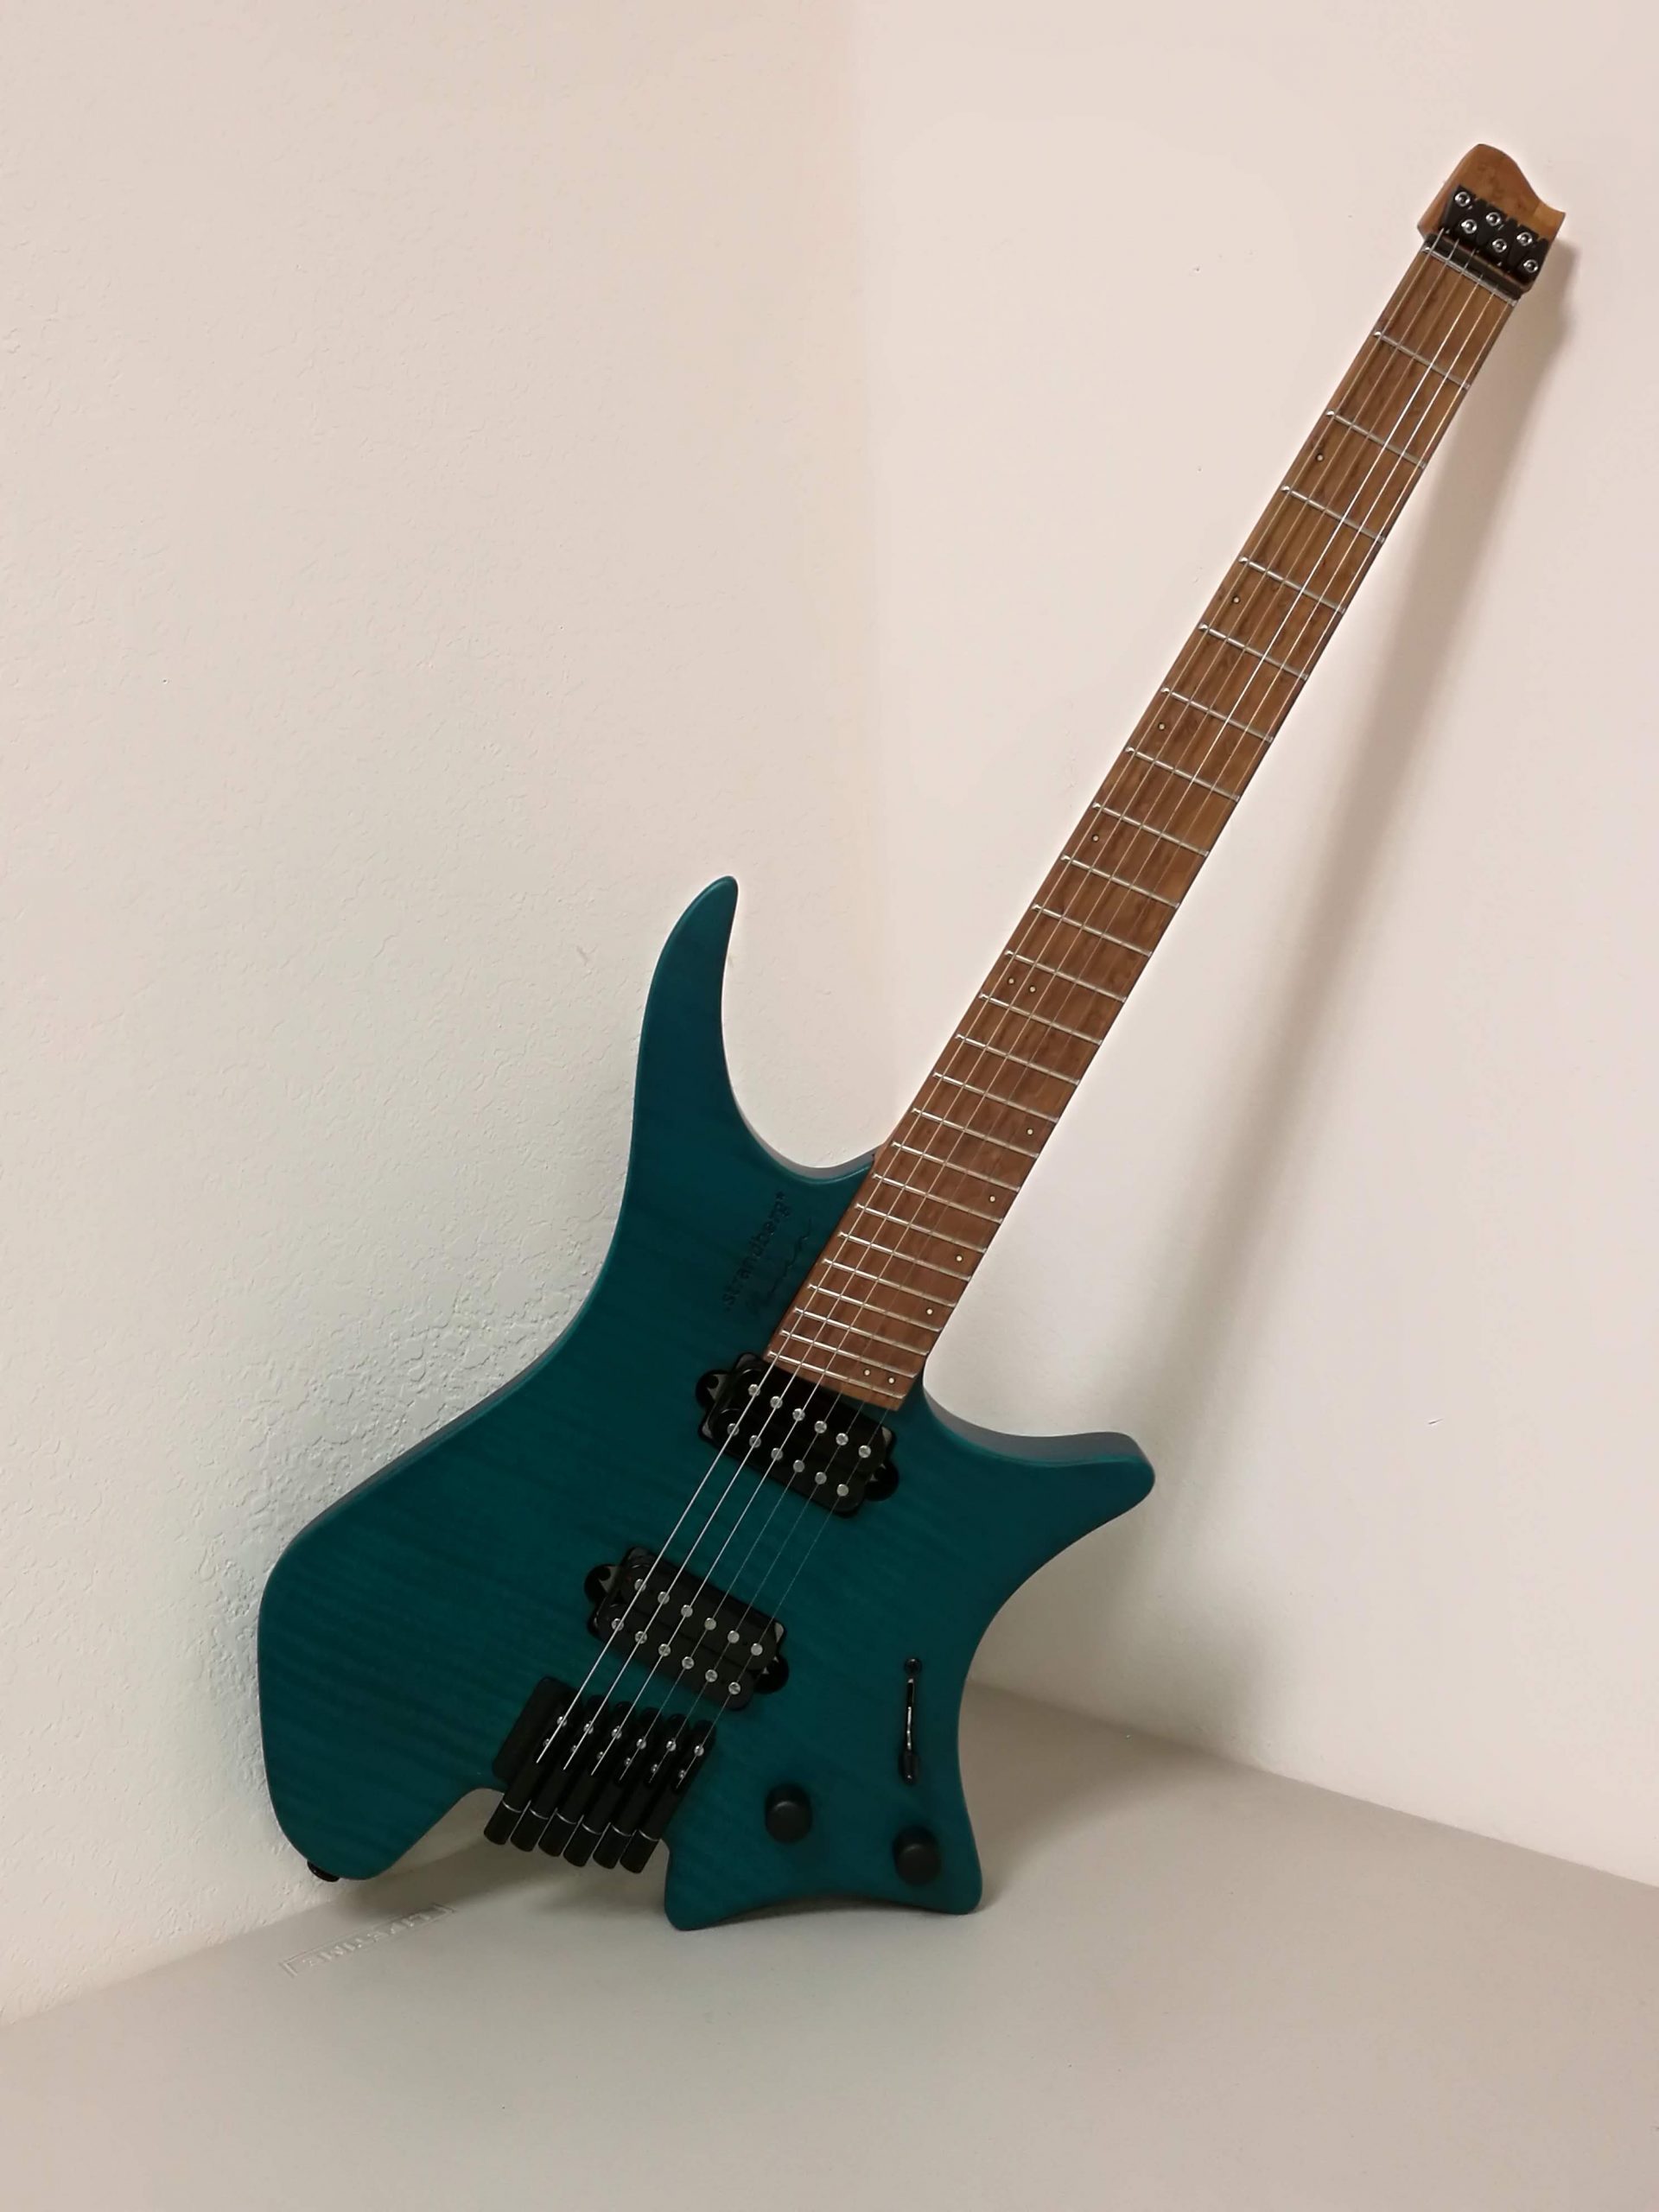 Boden Original 6 Blue B-Stock | .strandberg* Guitars